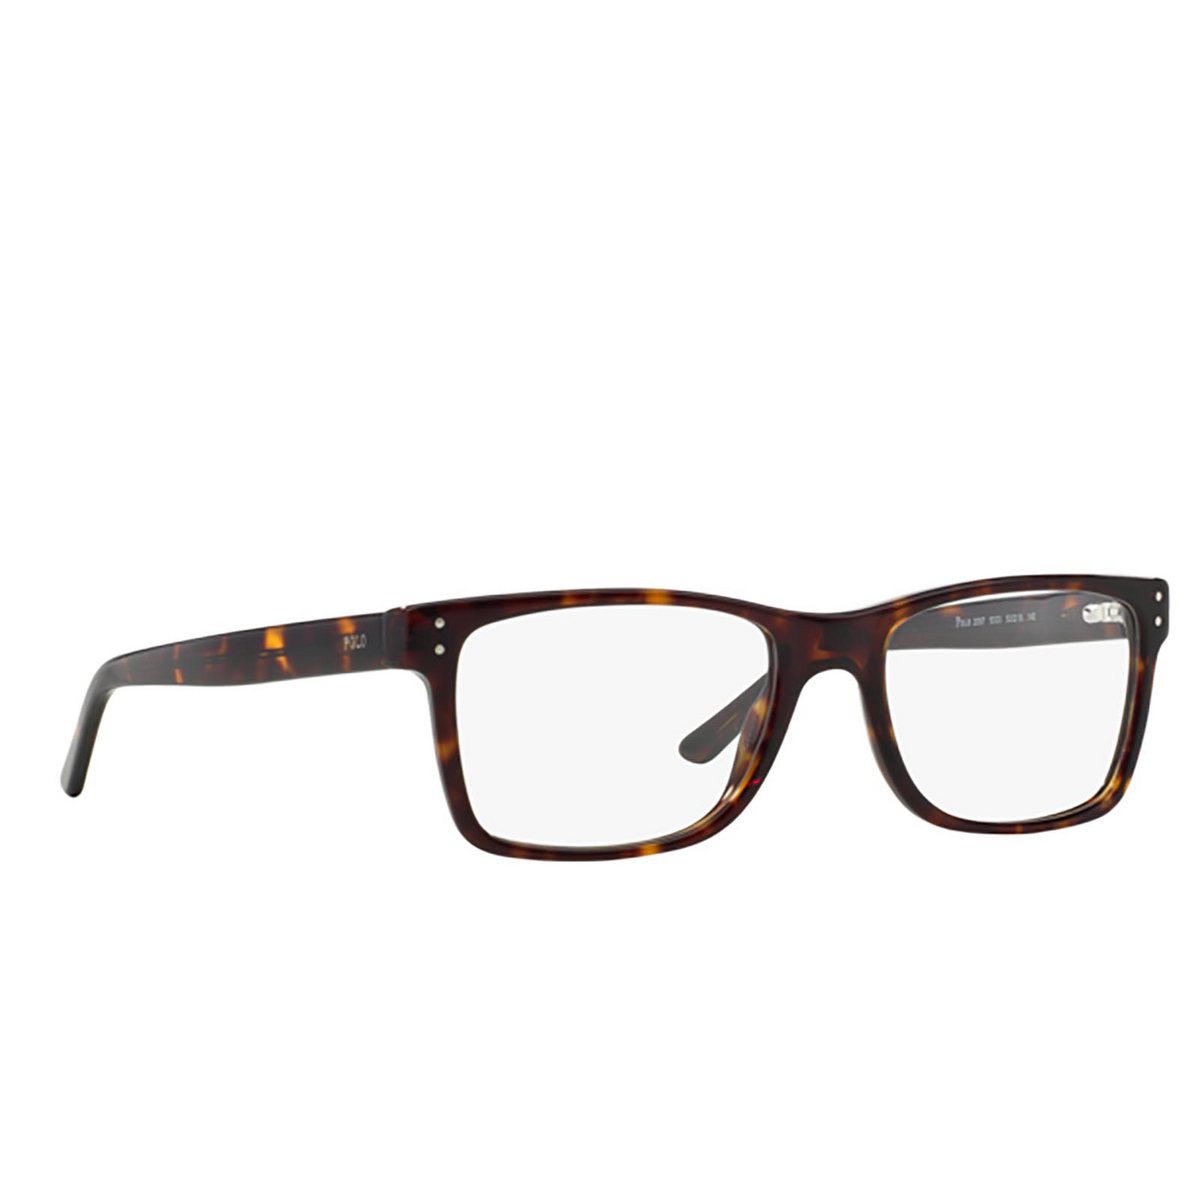 Polo Ralph Lauren® Square Eyeglasses: PH2057 color 5003 - three-quarters view.